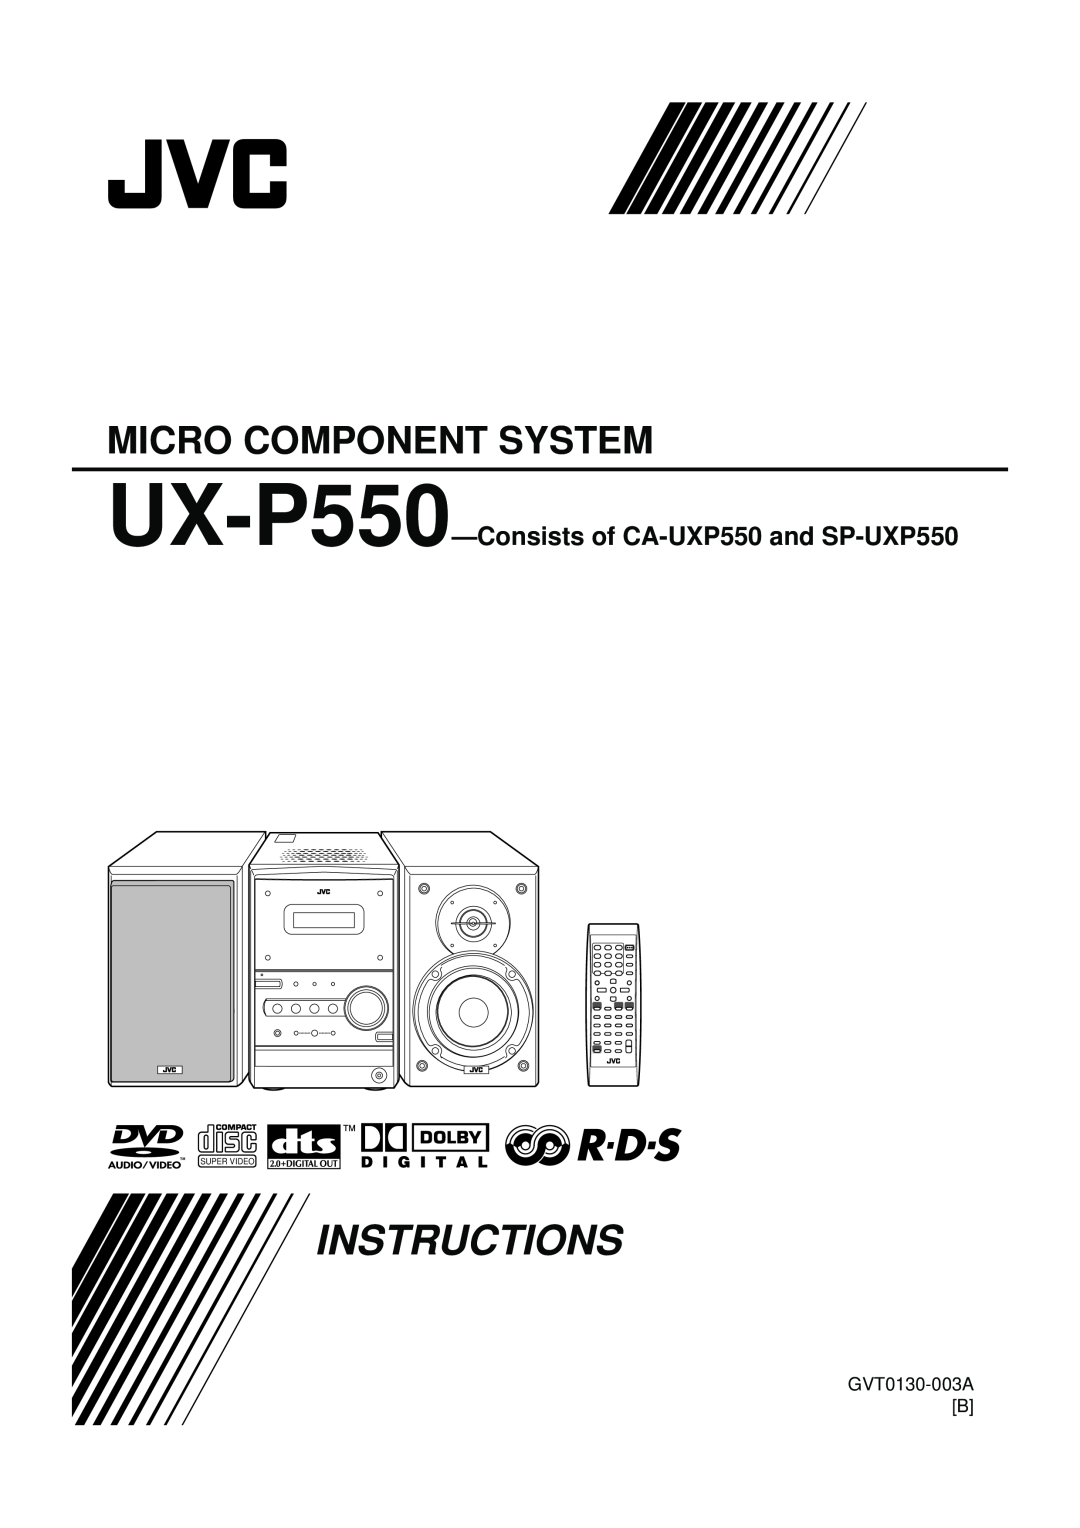 JVC manual UX-P550-Consistsof CA-UXP550and SP-UXP550, GVT0130-003AB, Instructions, Micro Component System, Super Video 